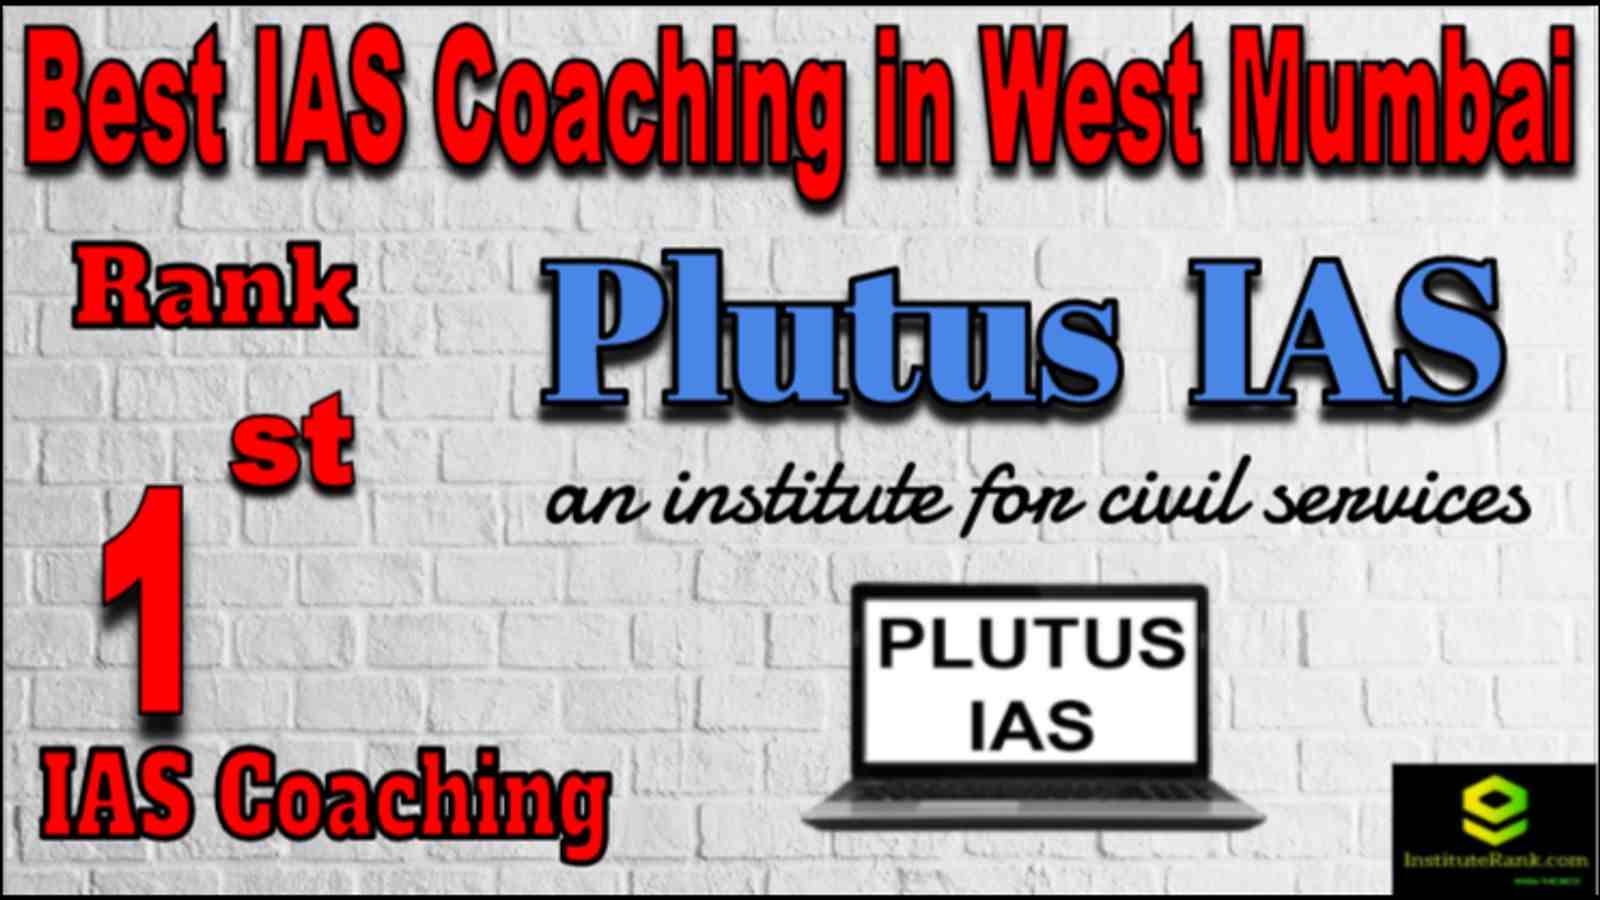 Rank 1 Best IAS Coaching in West Mumbai